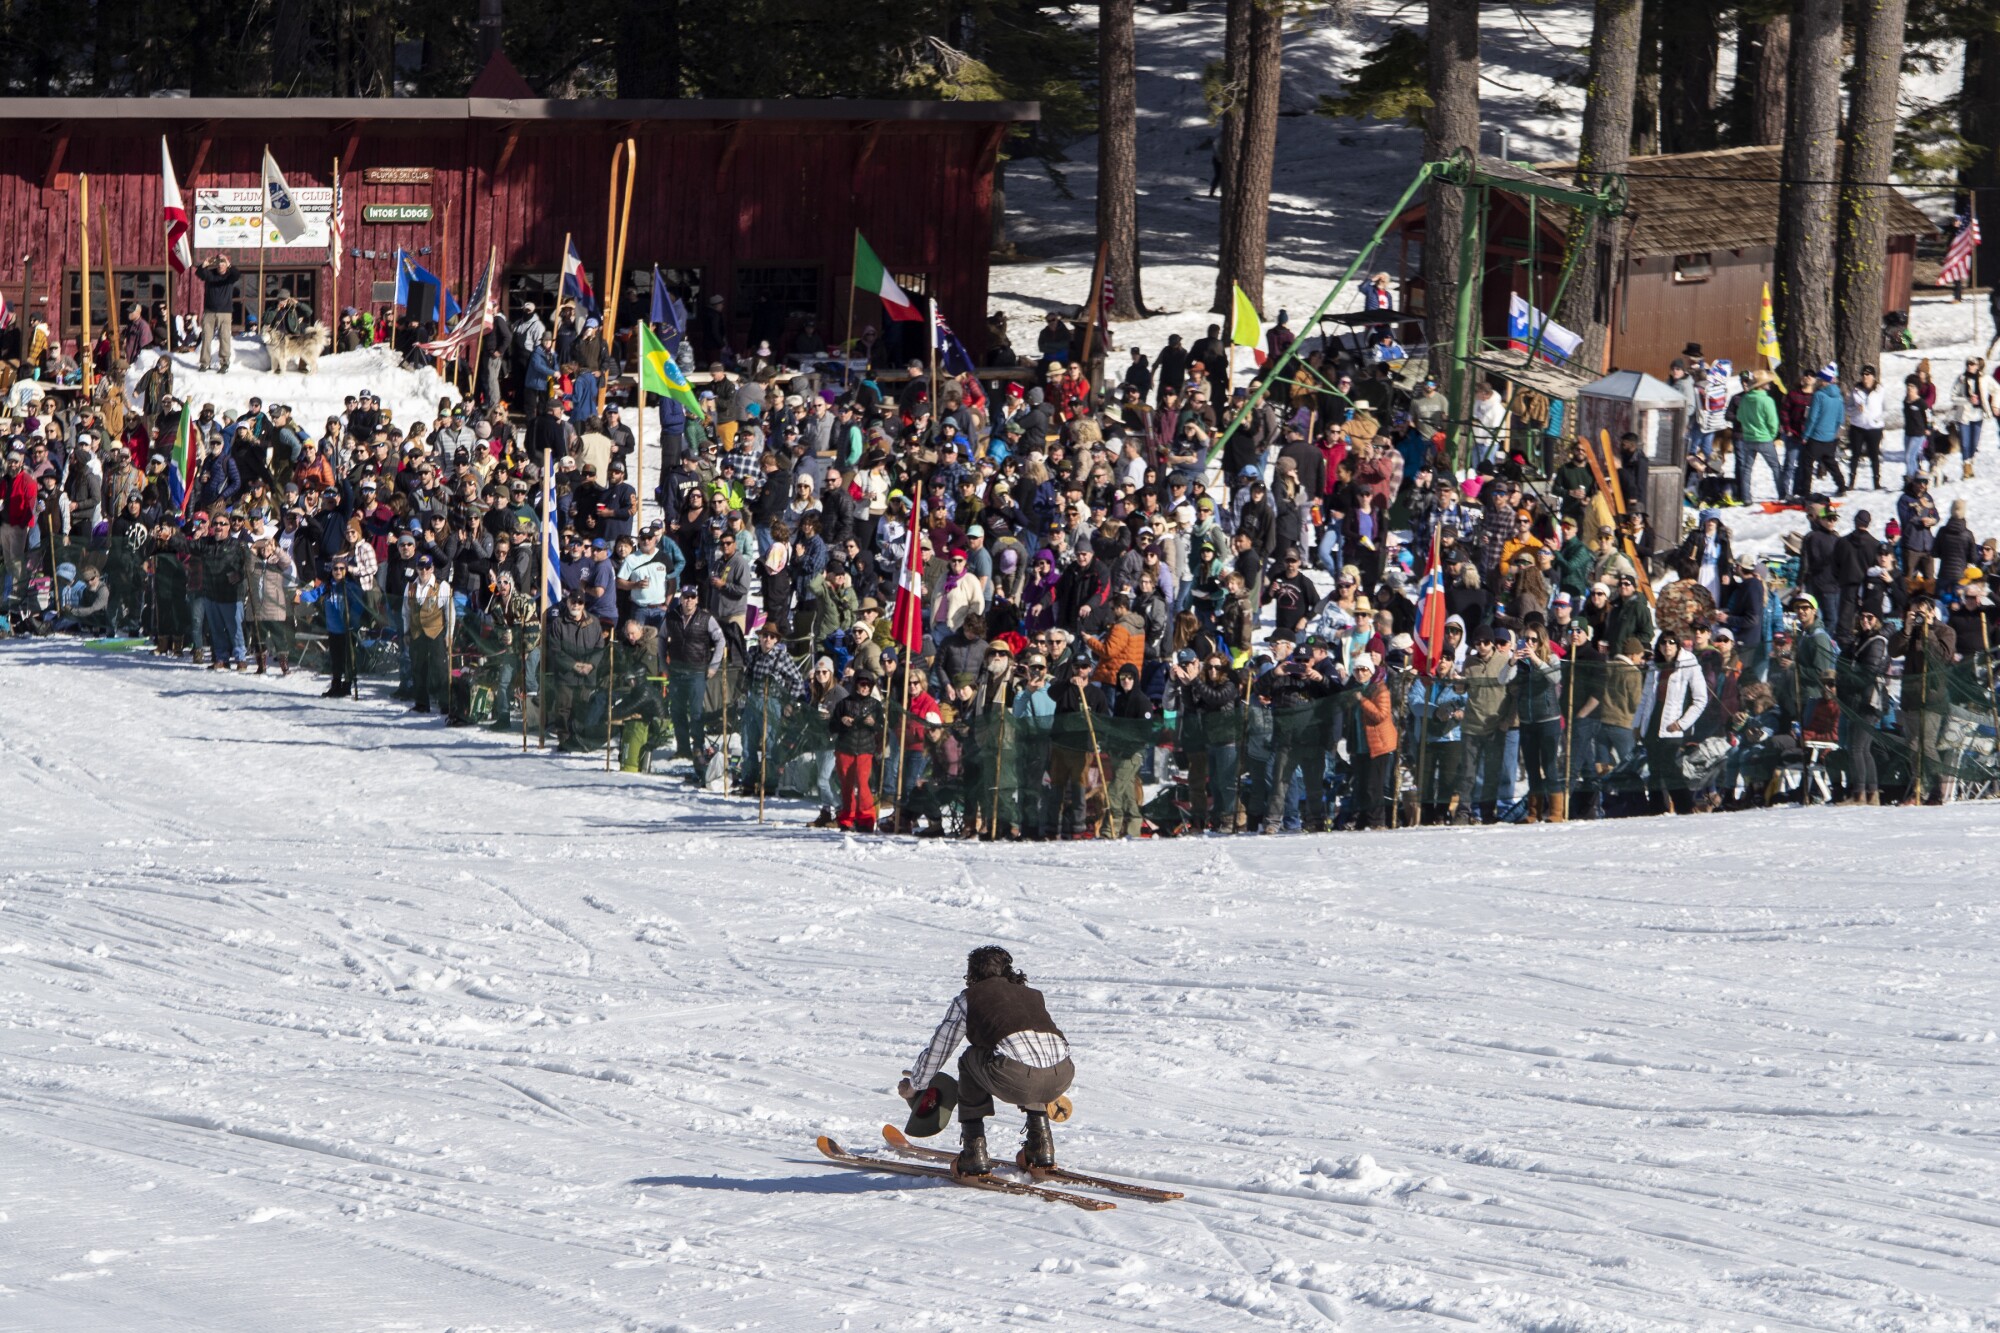 A crowd of spectators watch a ski racer